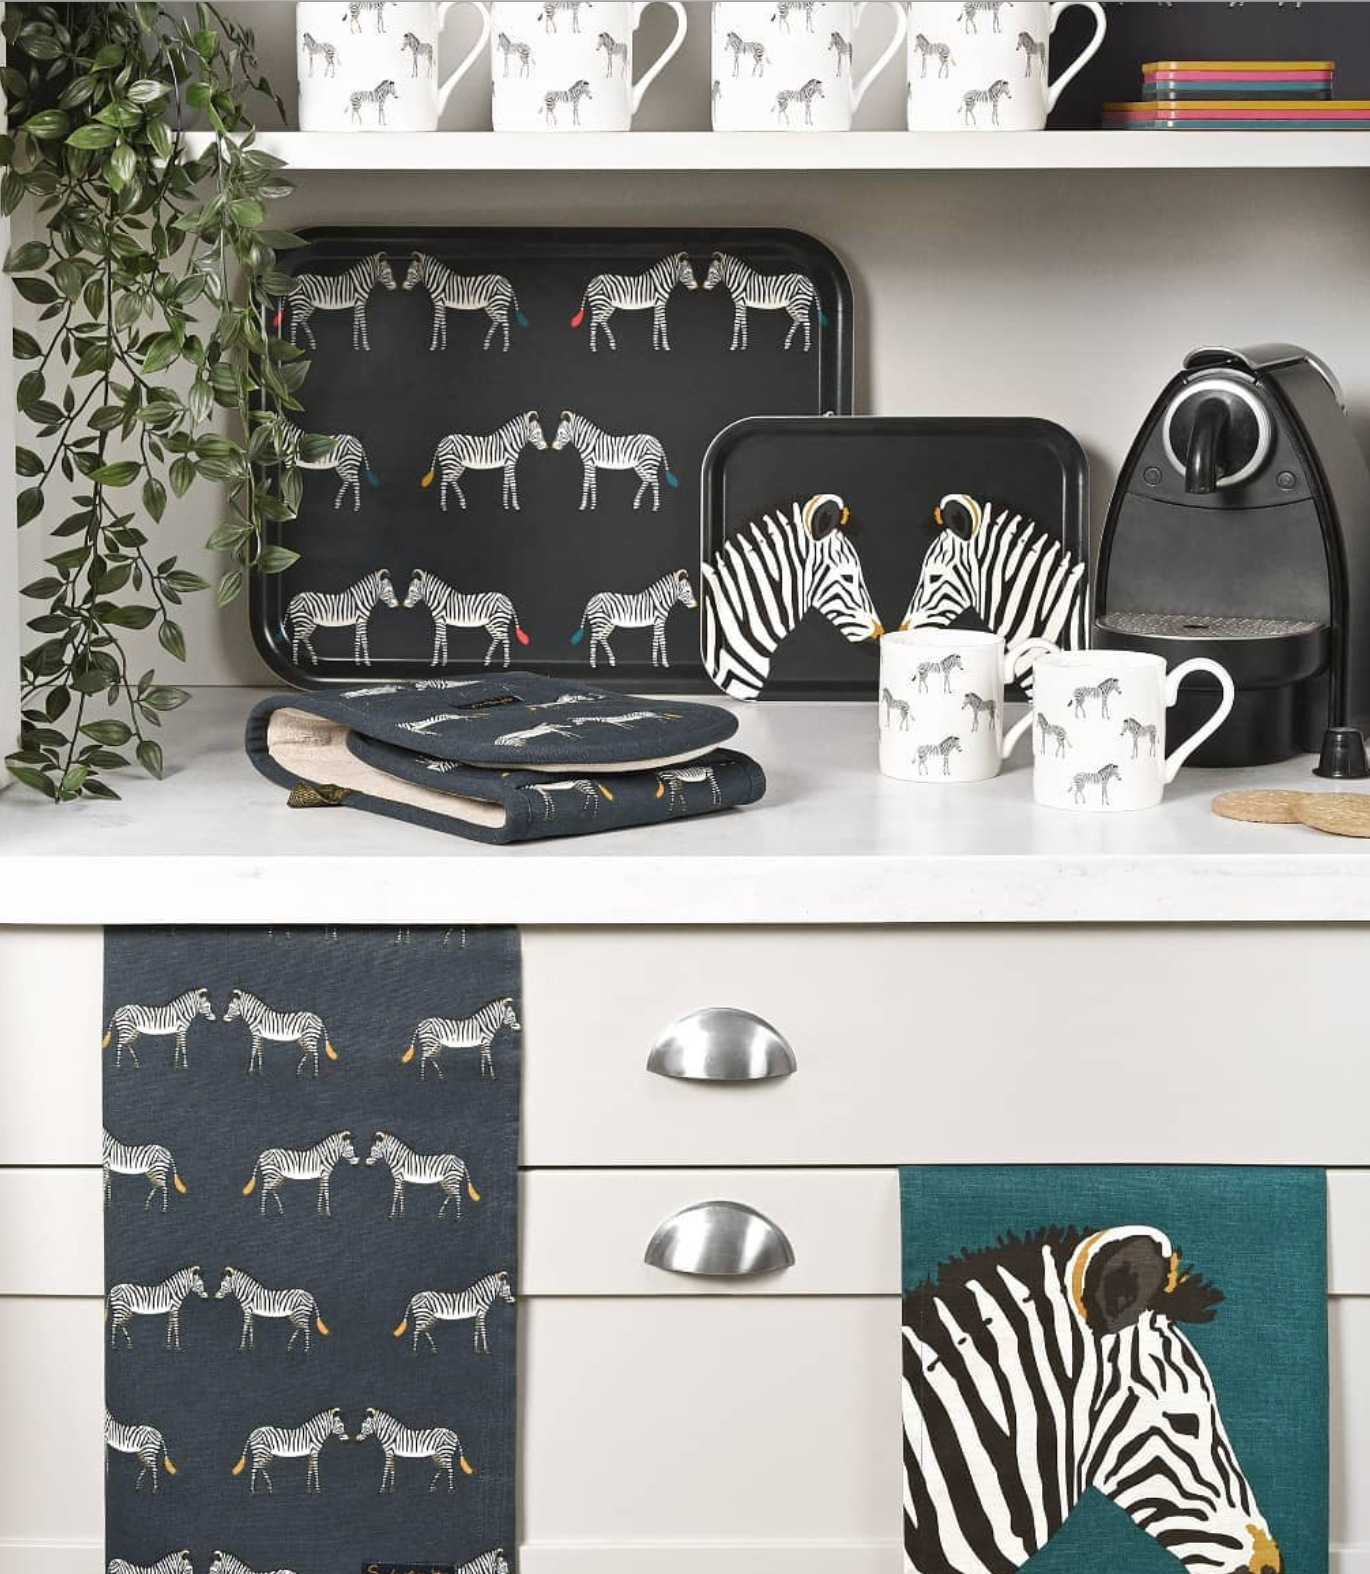 Sophie Allport Coasters, Zebra ( Set of 4 )